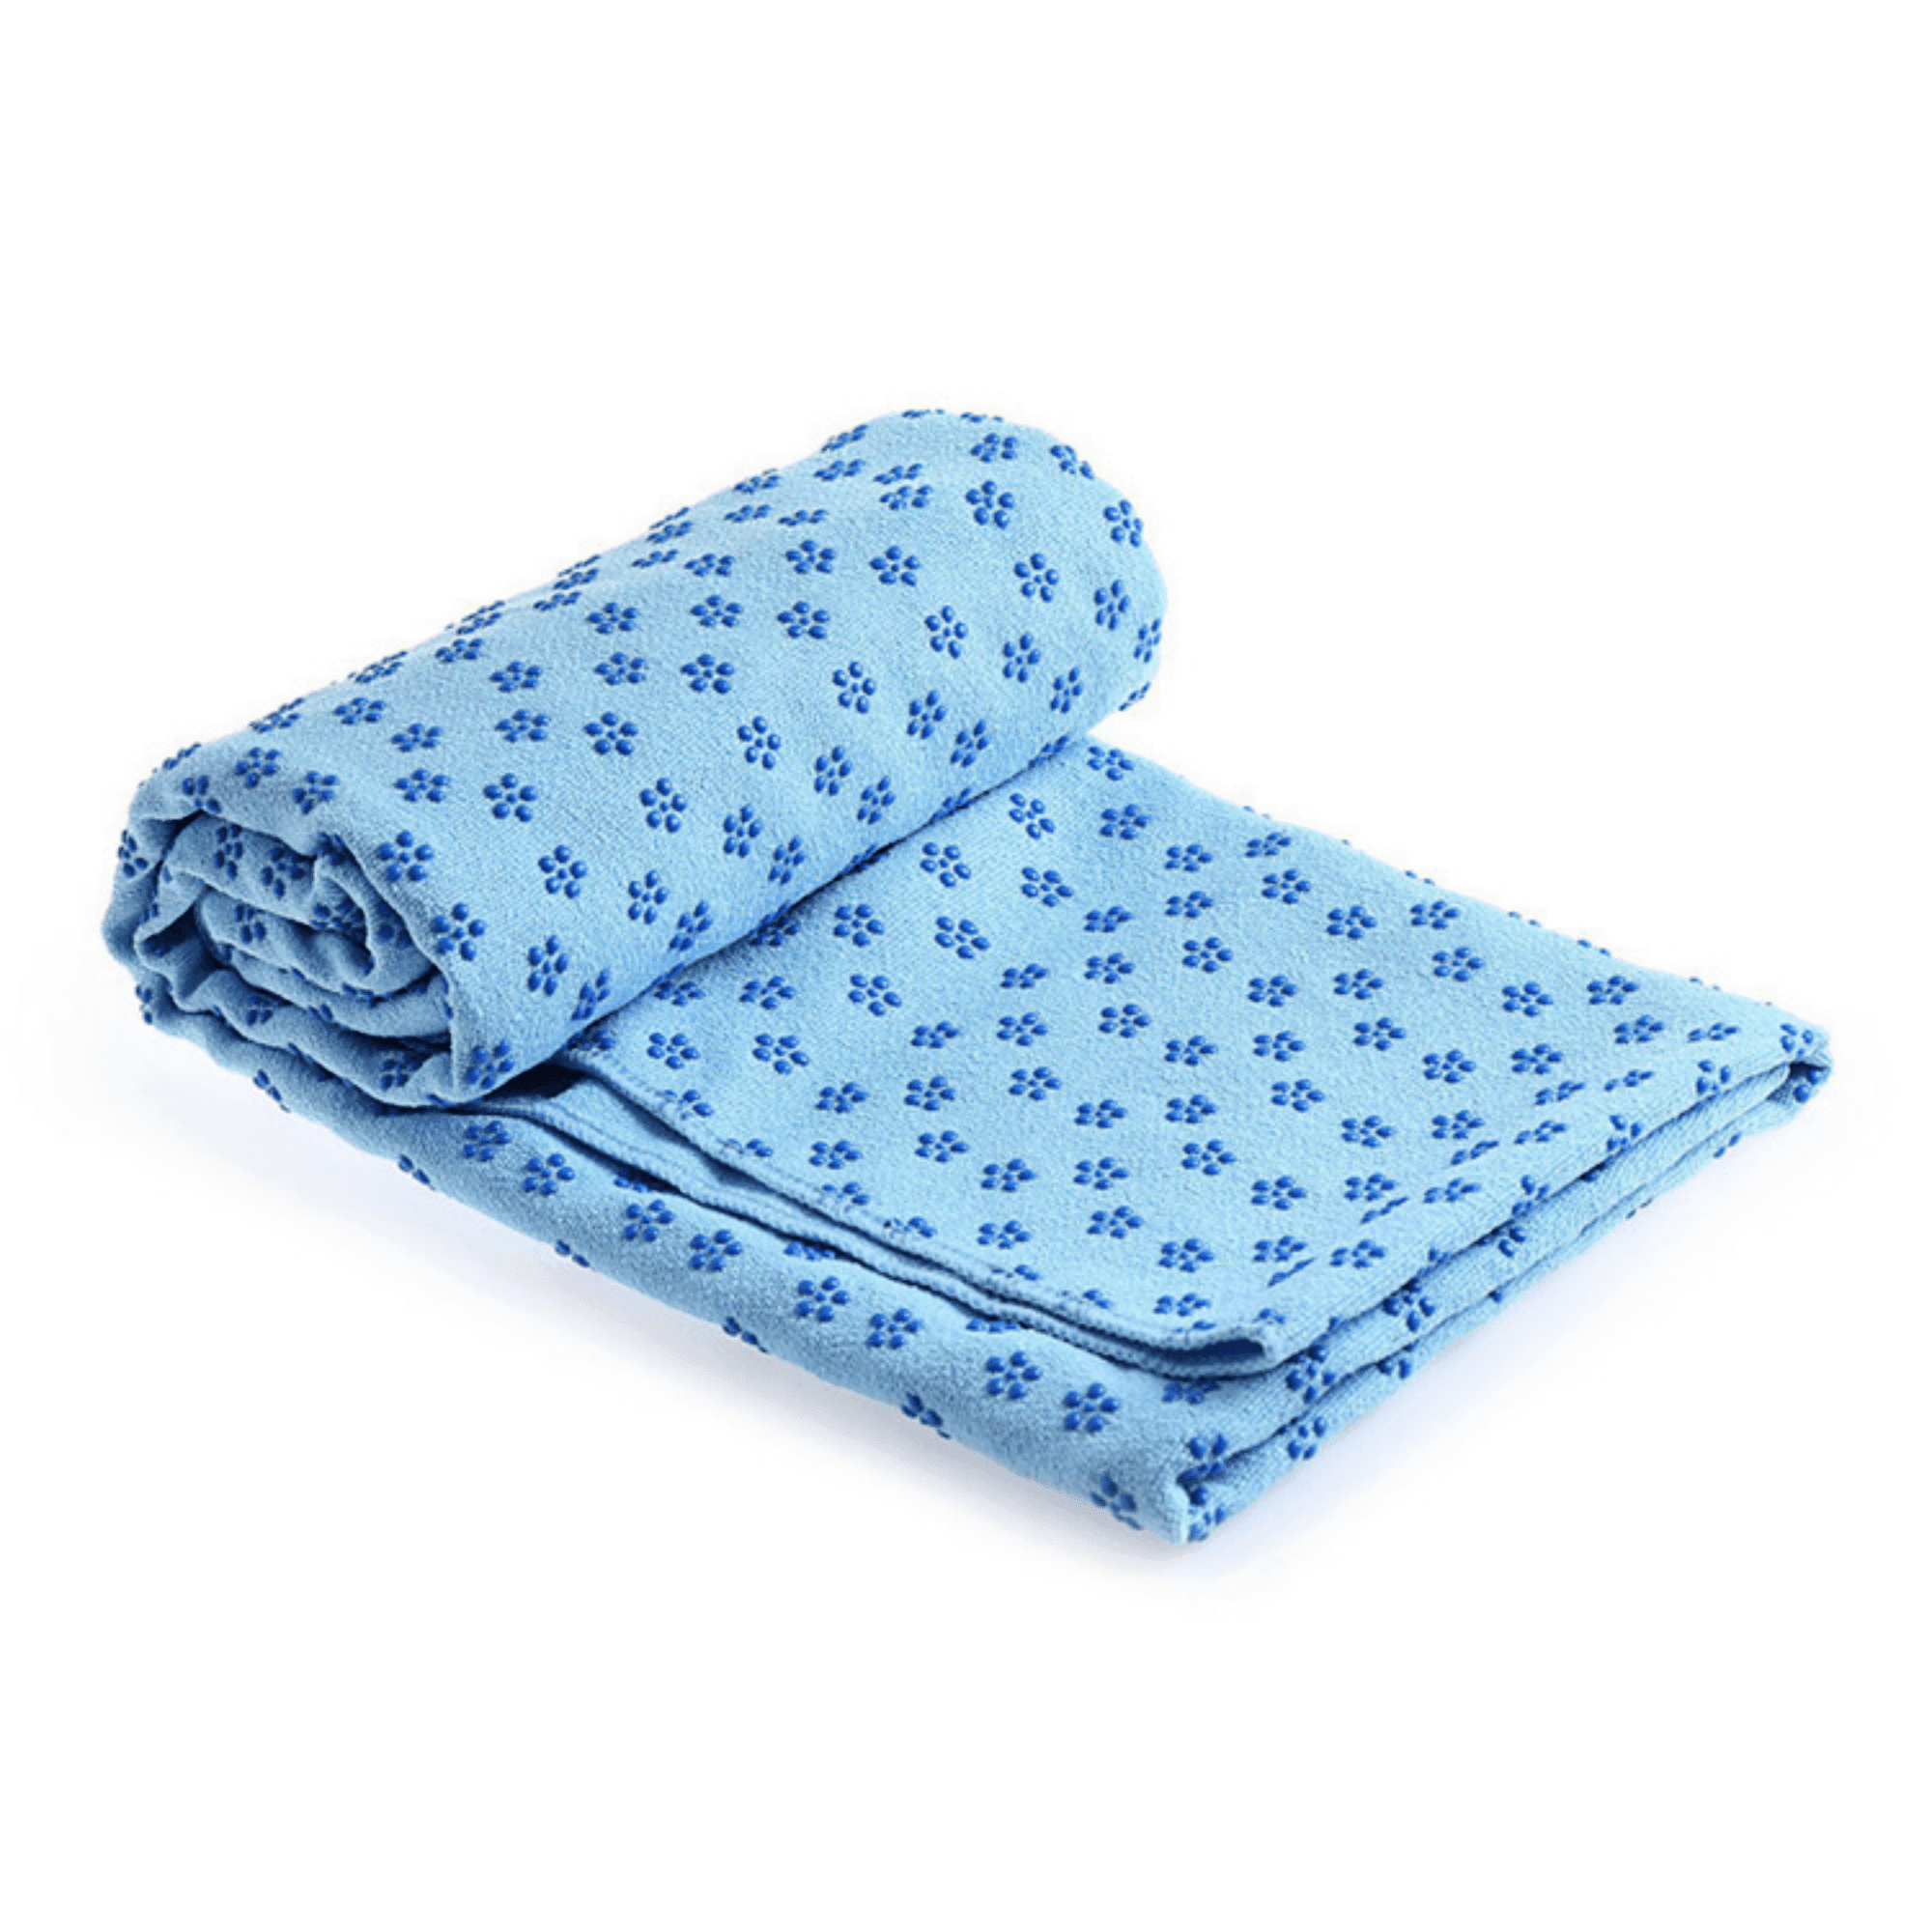 Premium Absorption Hot Yoga Mat Towel with Slip-Resistant Grip